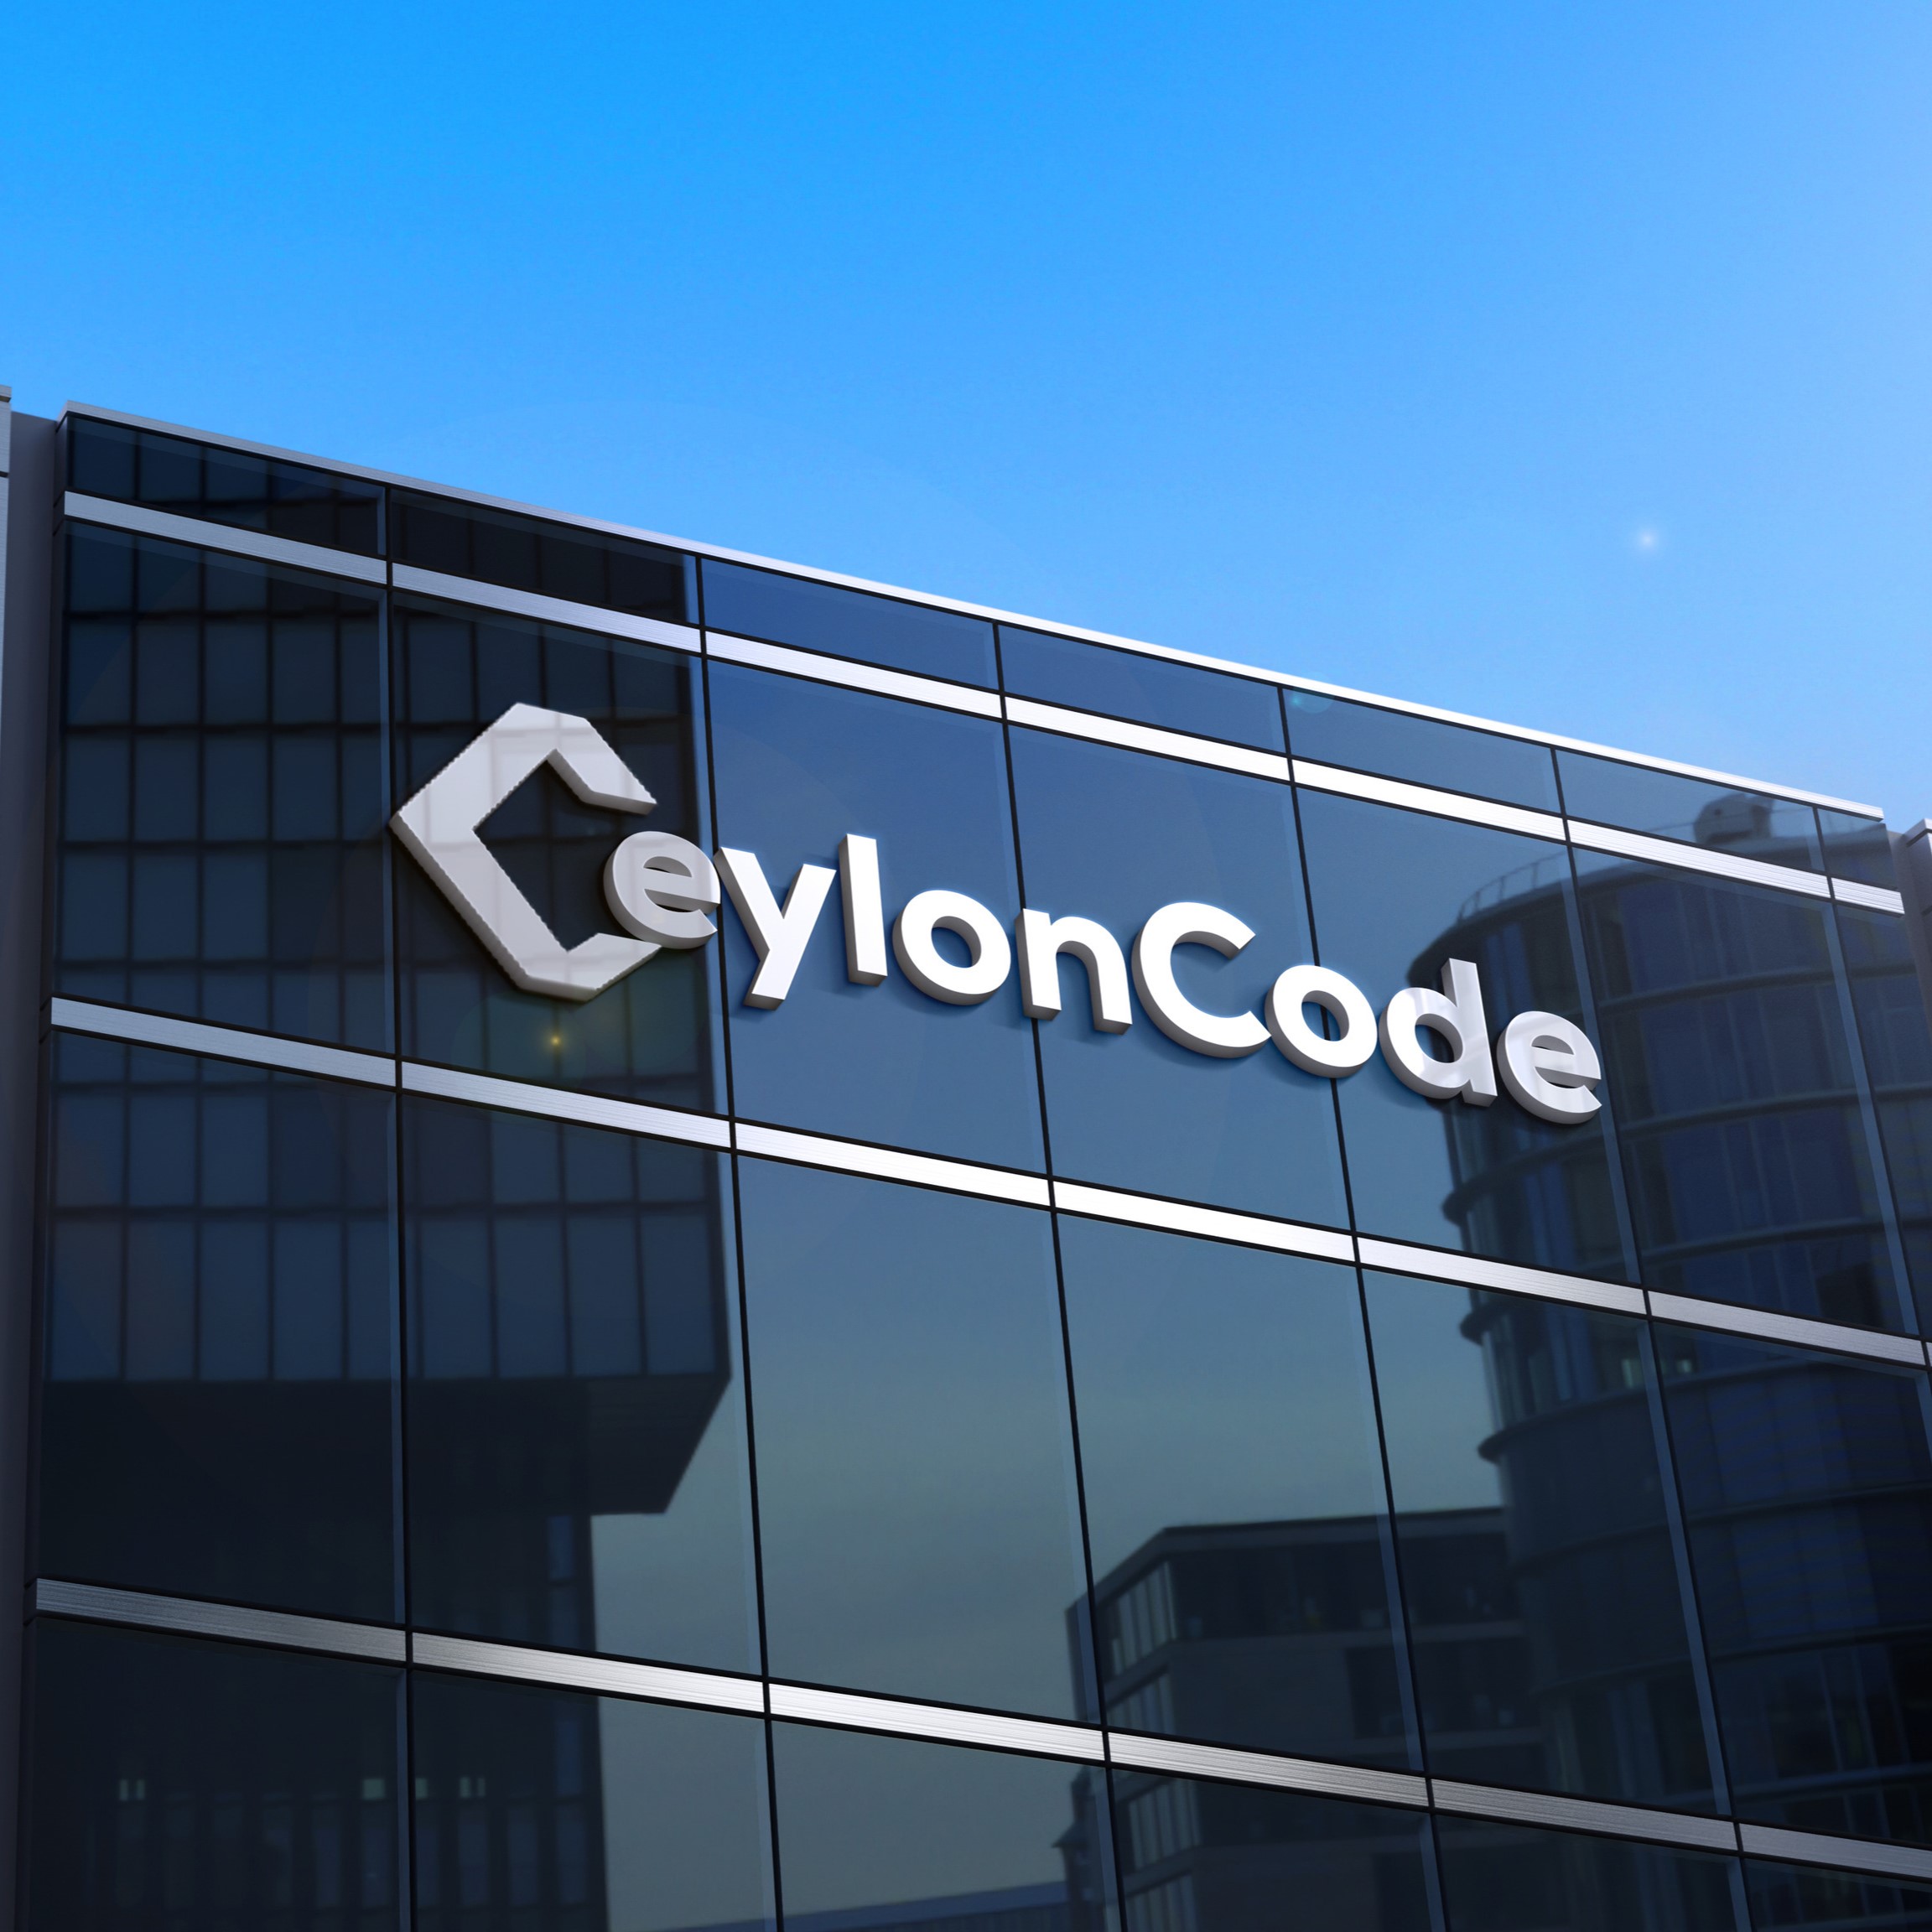 CO-Founder at Ceylon Code (pvt) Ltd